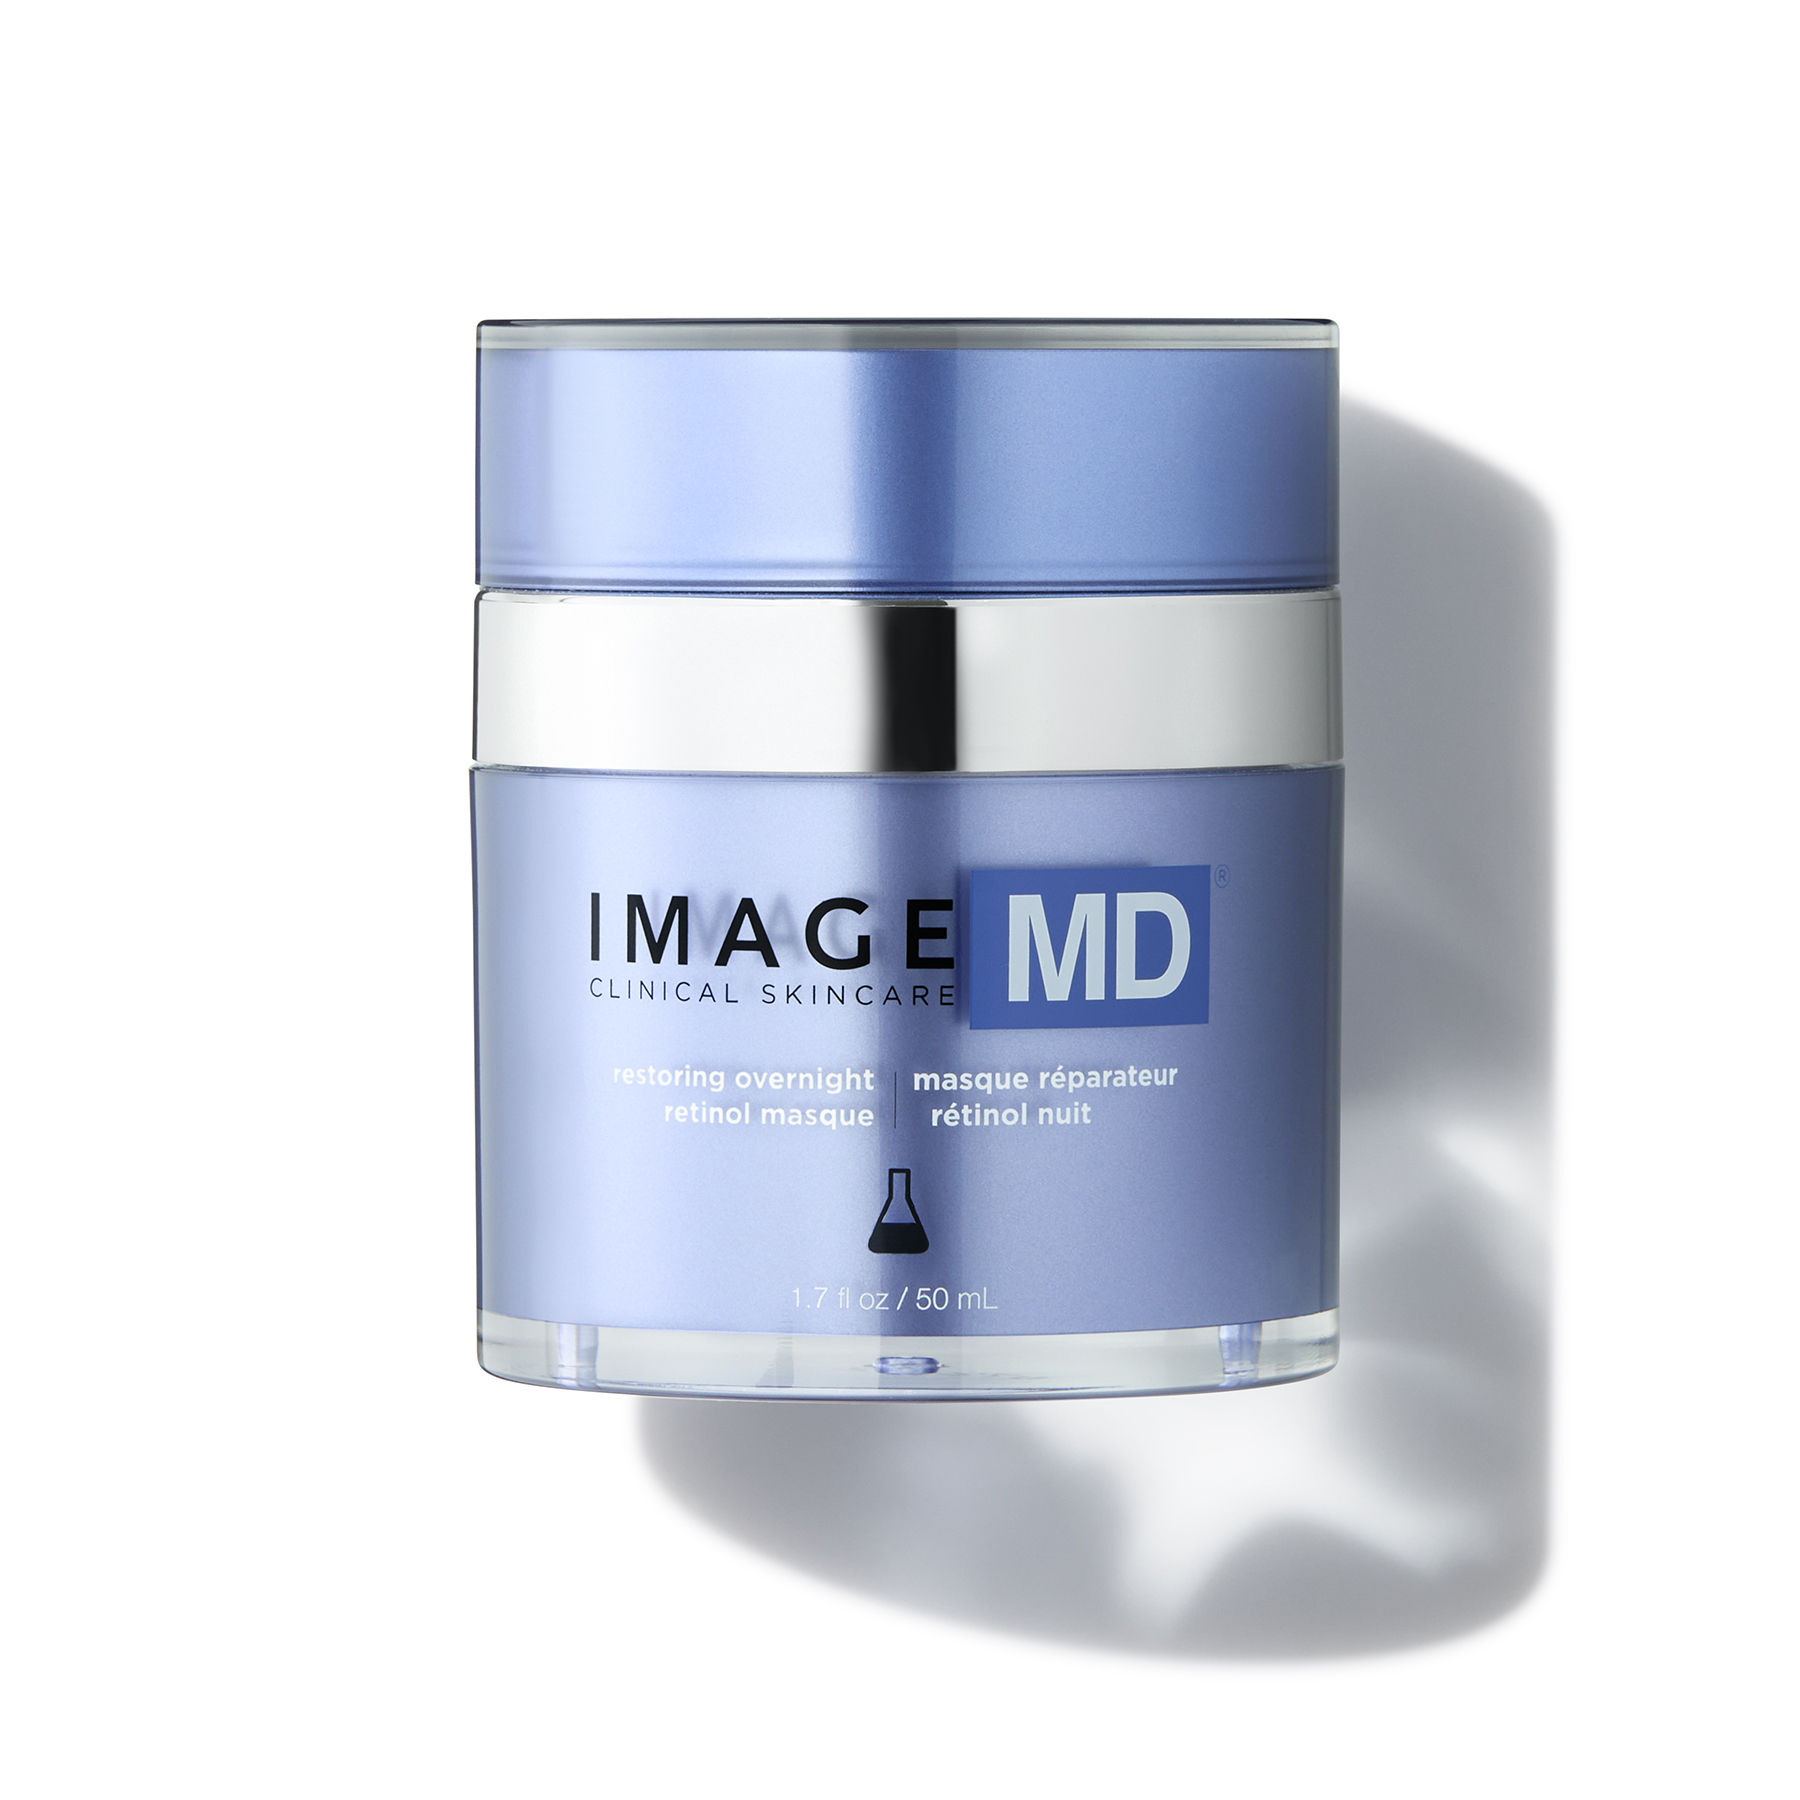 IMAGE_MD_restoring_overnight_retinol_masque_PDP_R01a